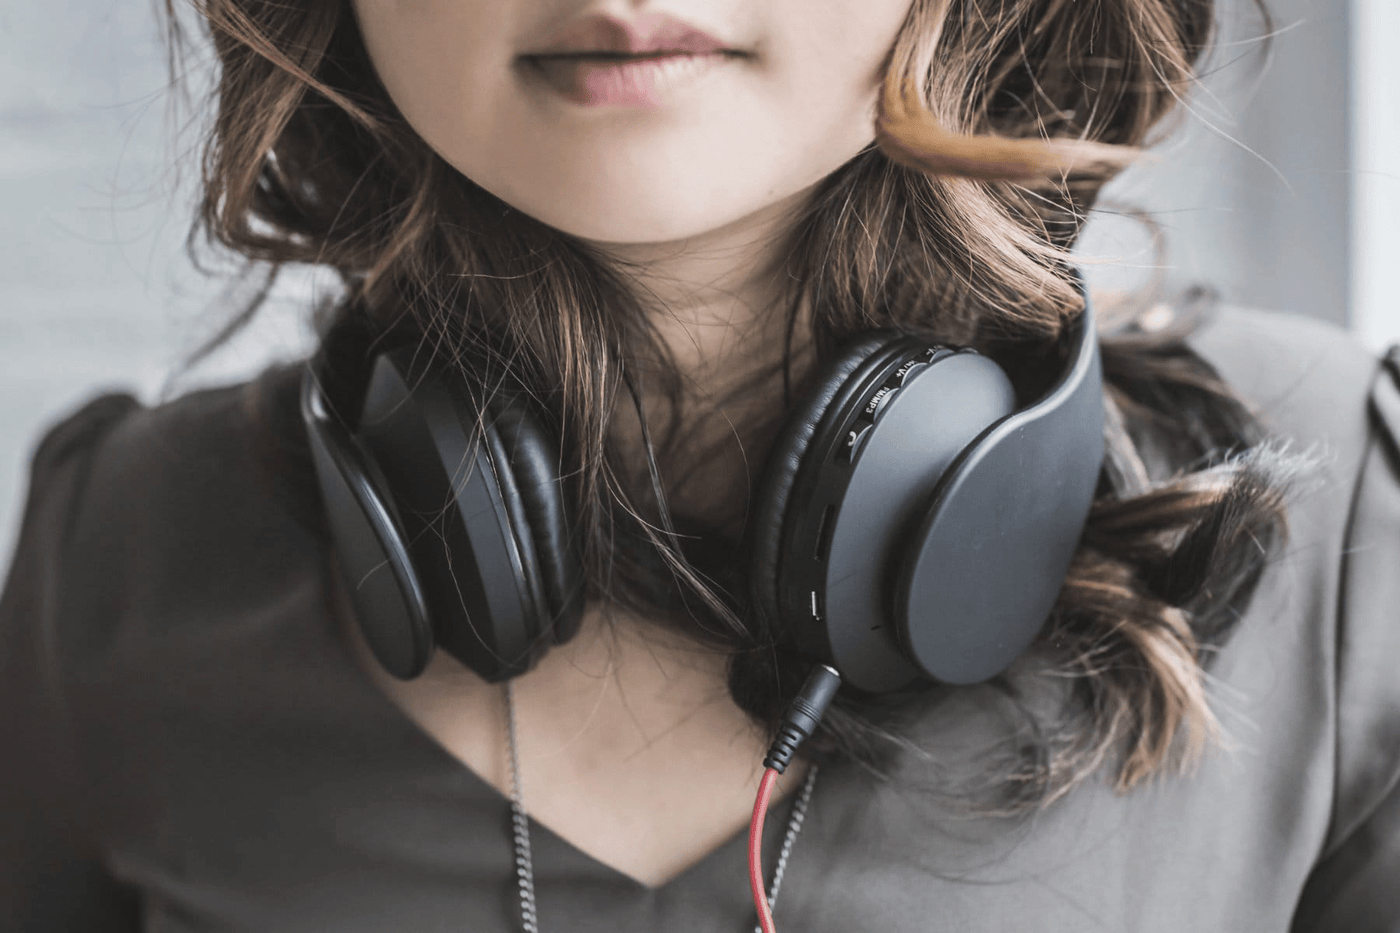 Young woman wearing headphones around her neck